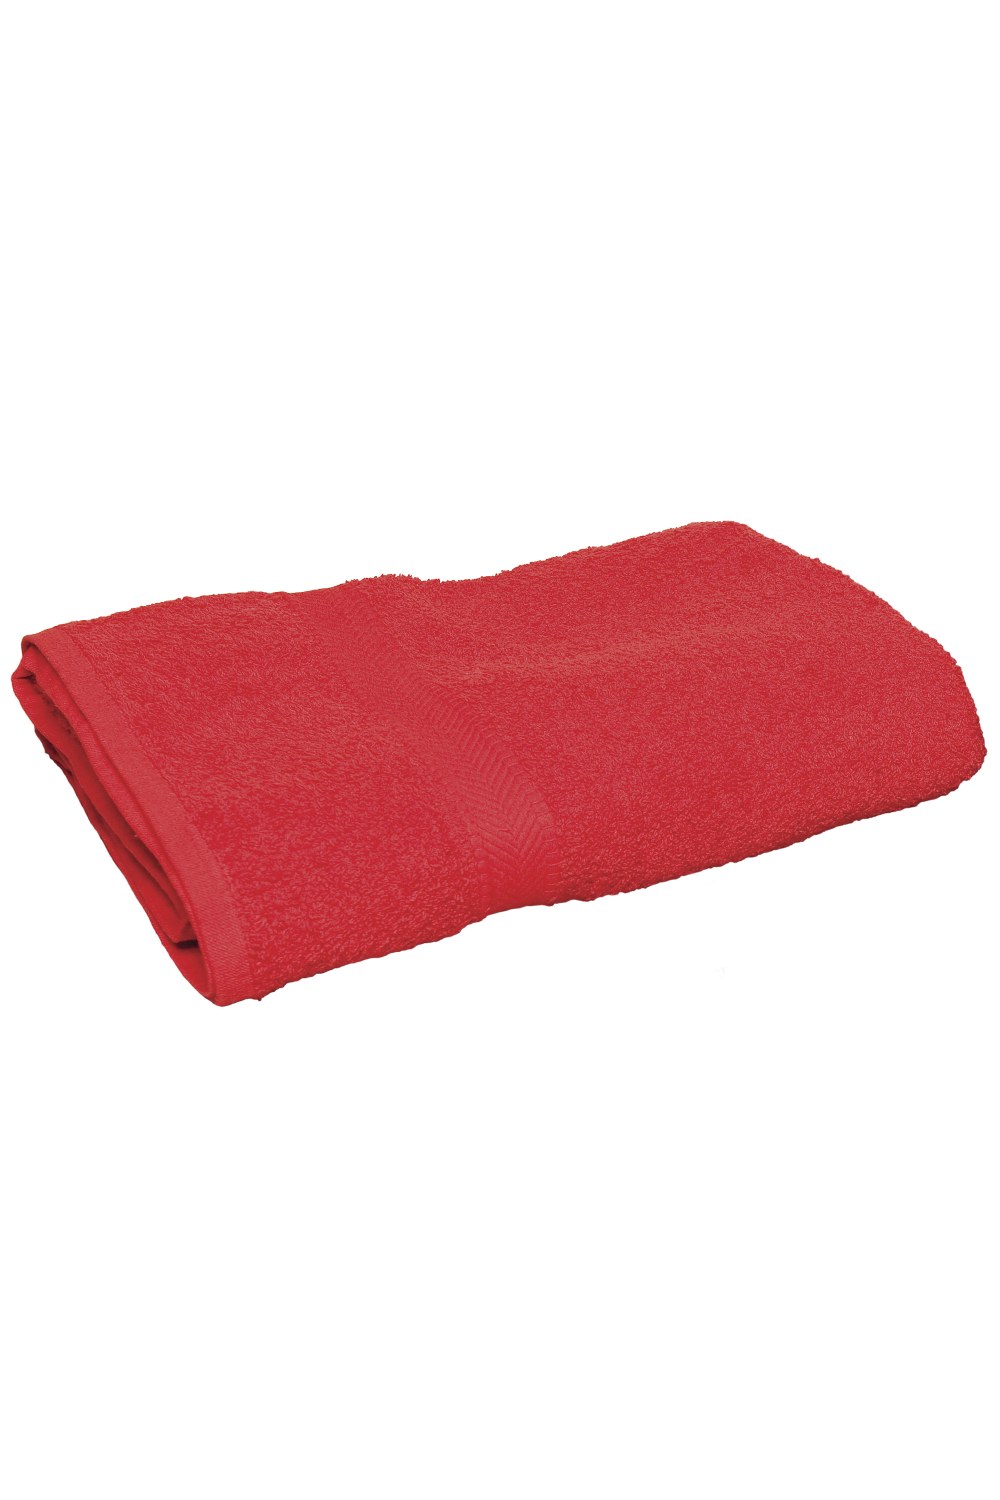 Towel City Luxury Range Guest Bath Towel (550 GSM)